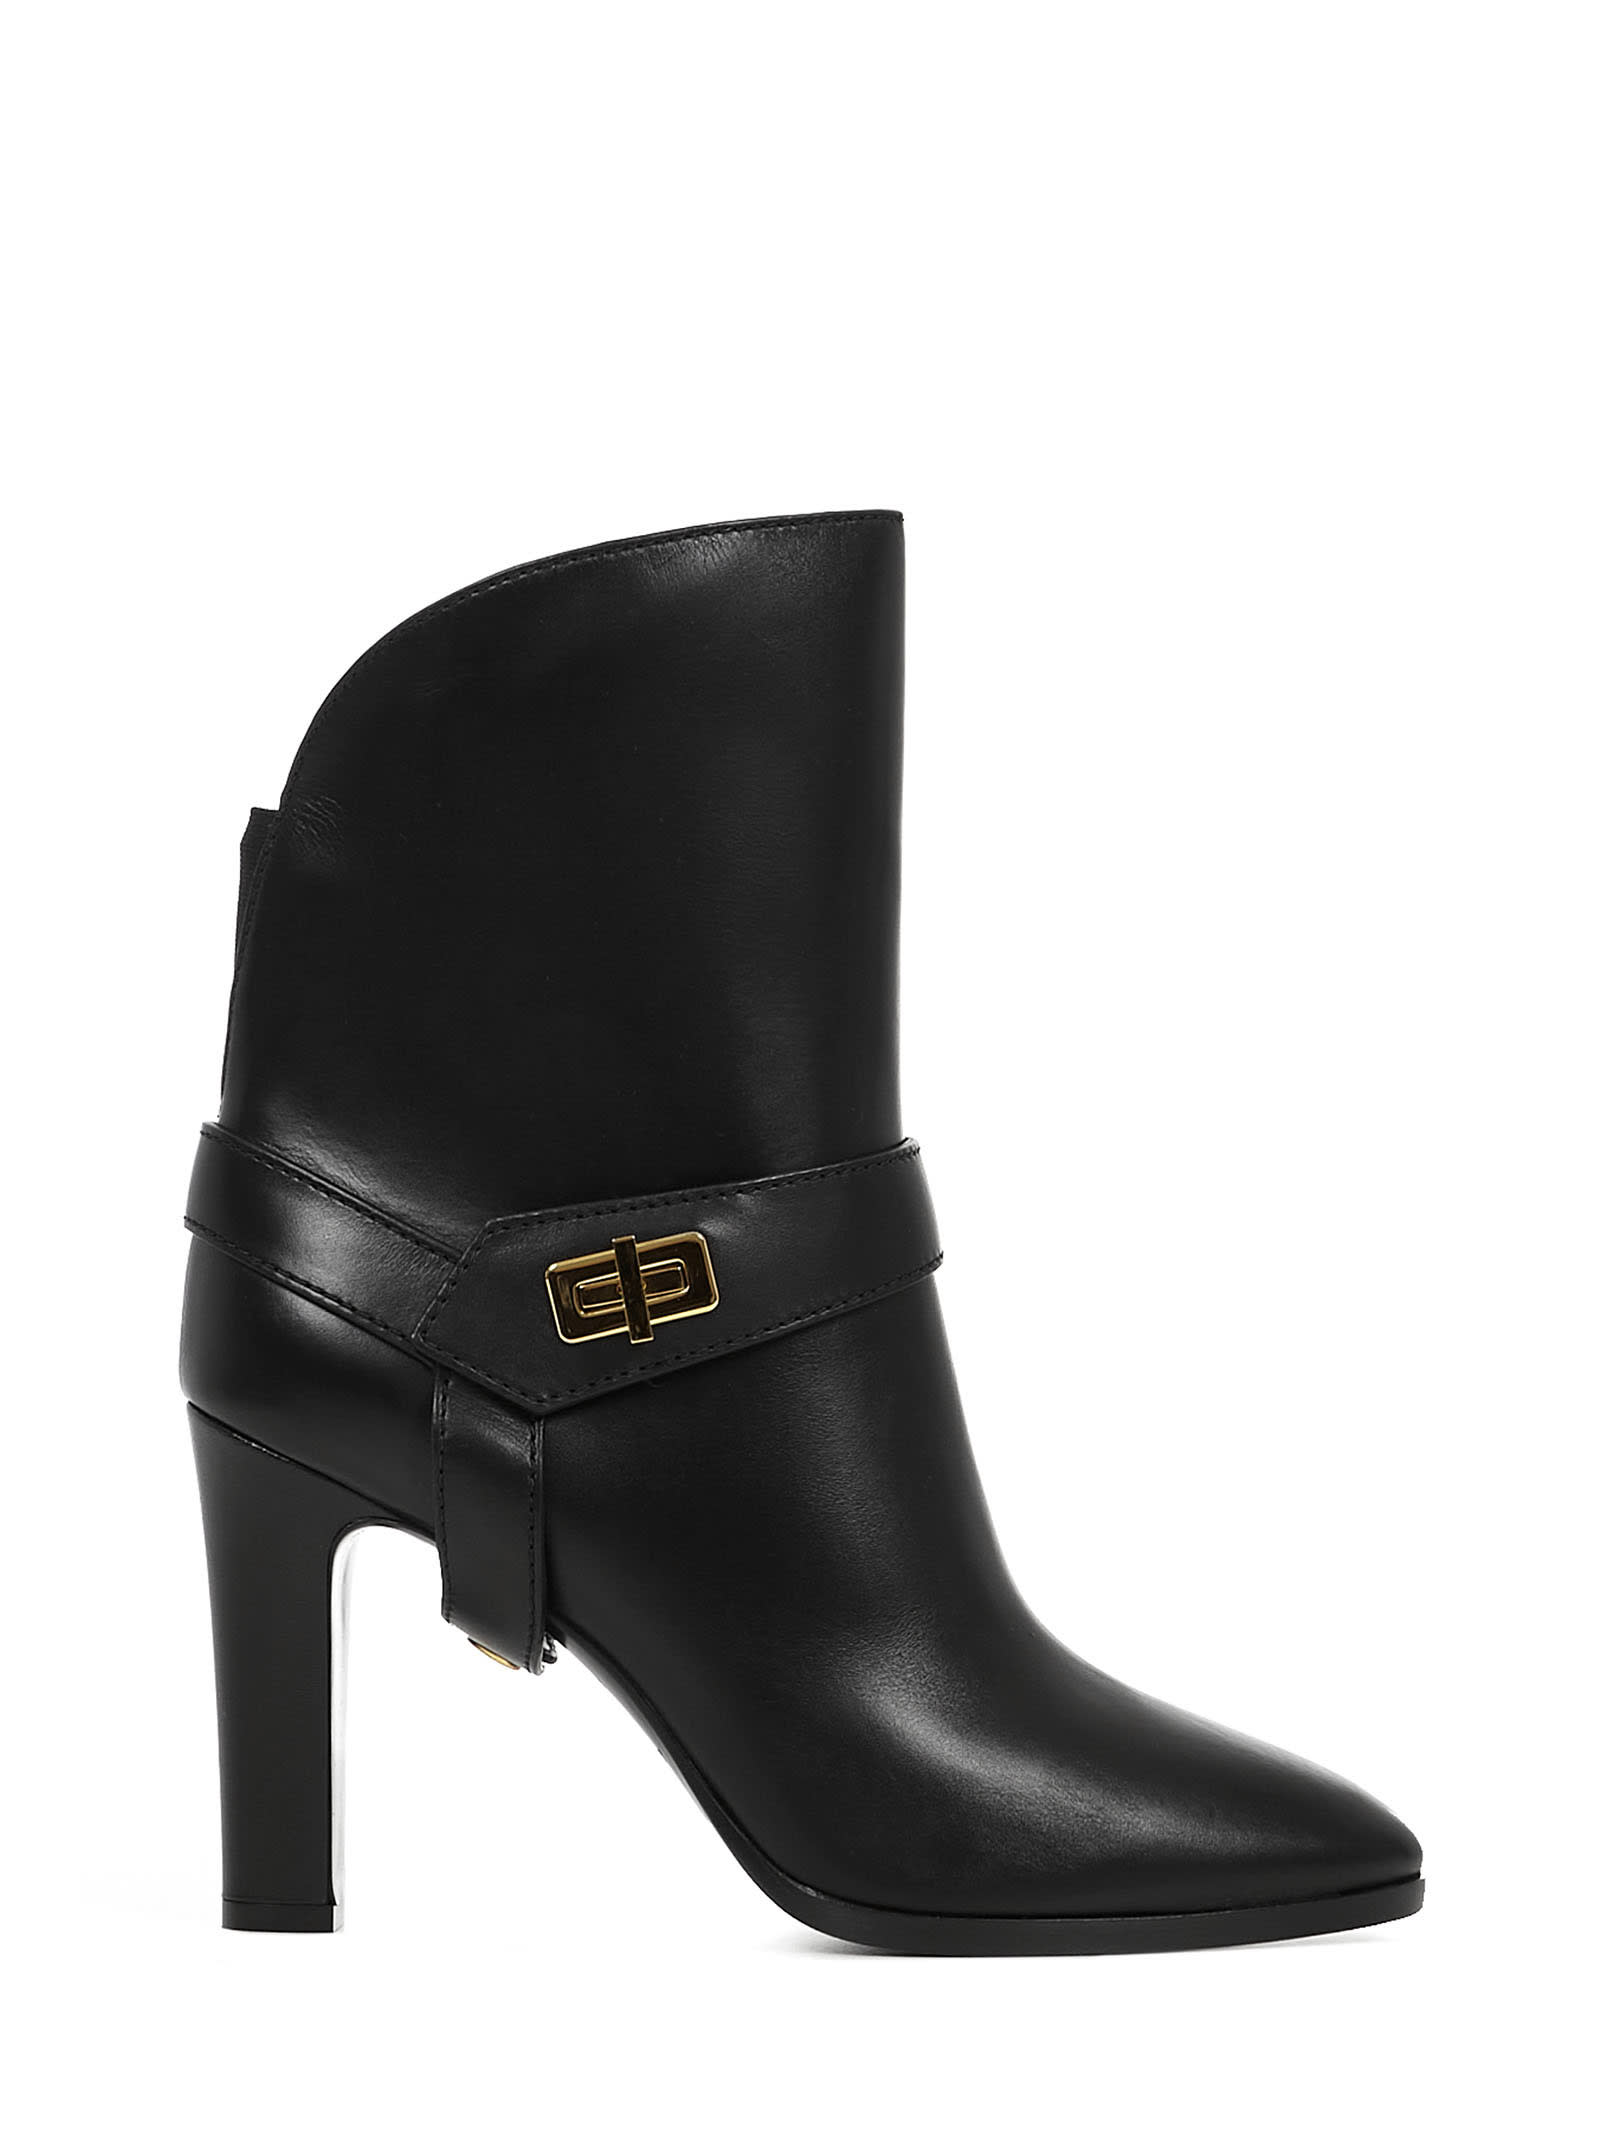 Givenchy Eden Boots | Coshio Online Shop